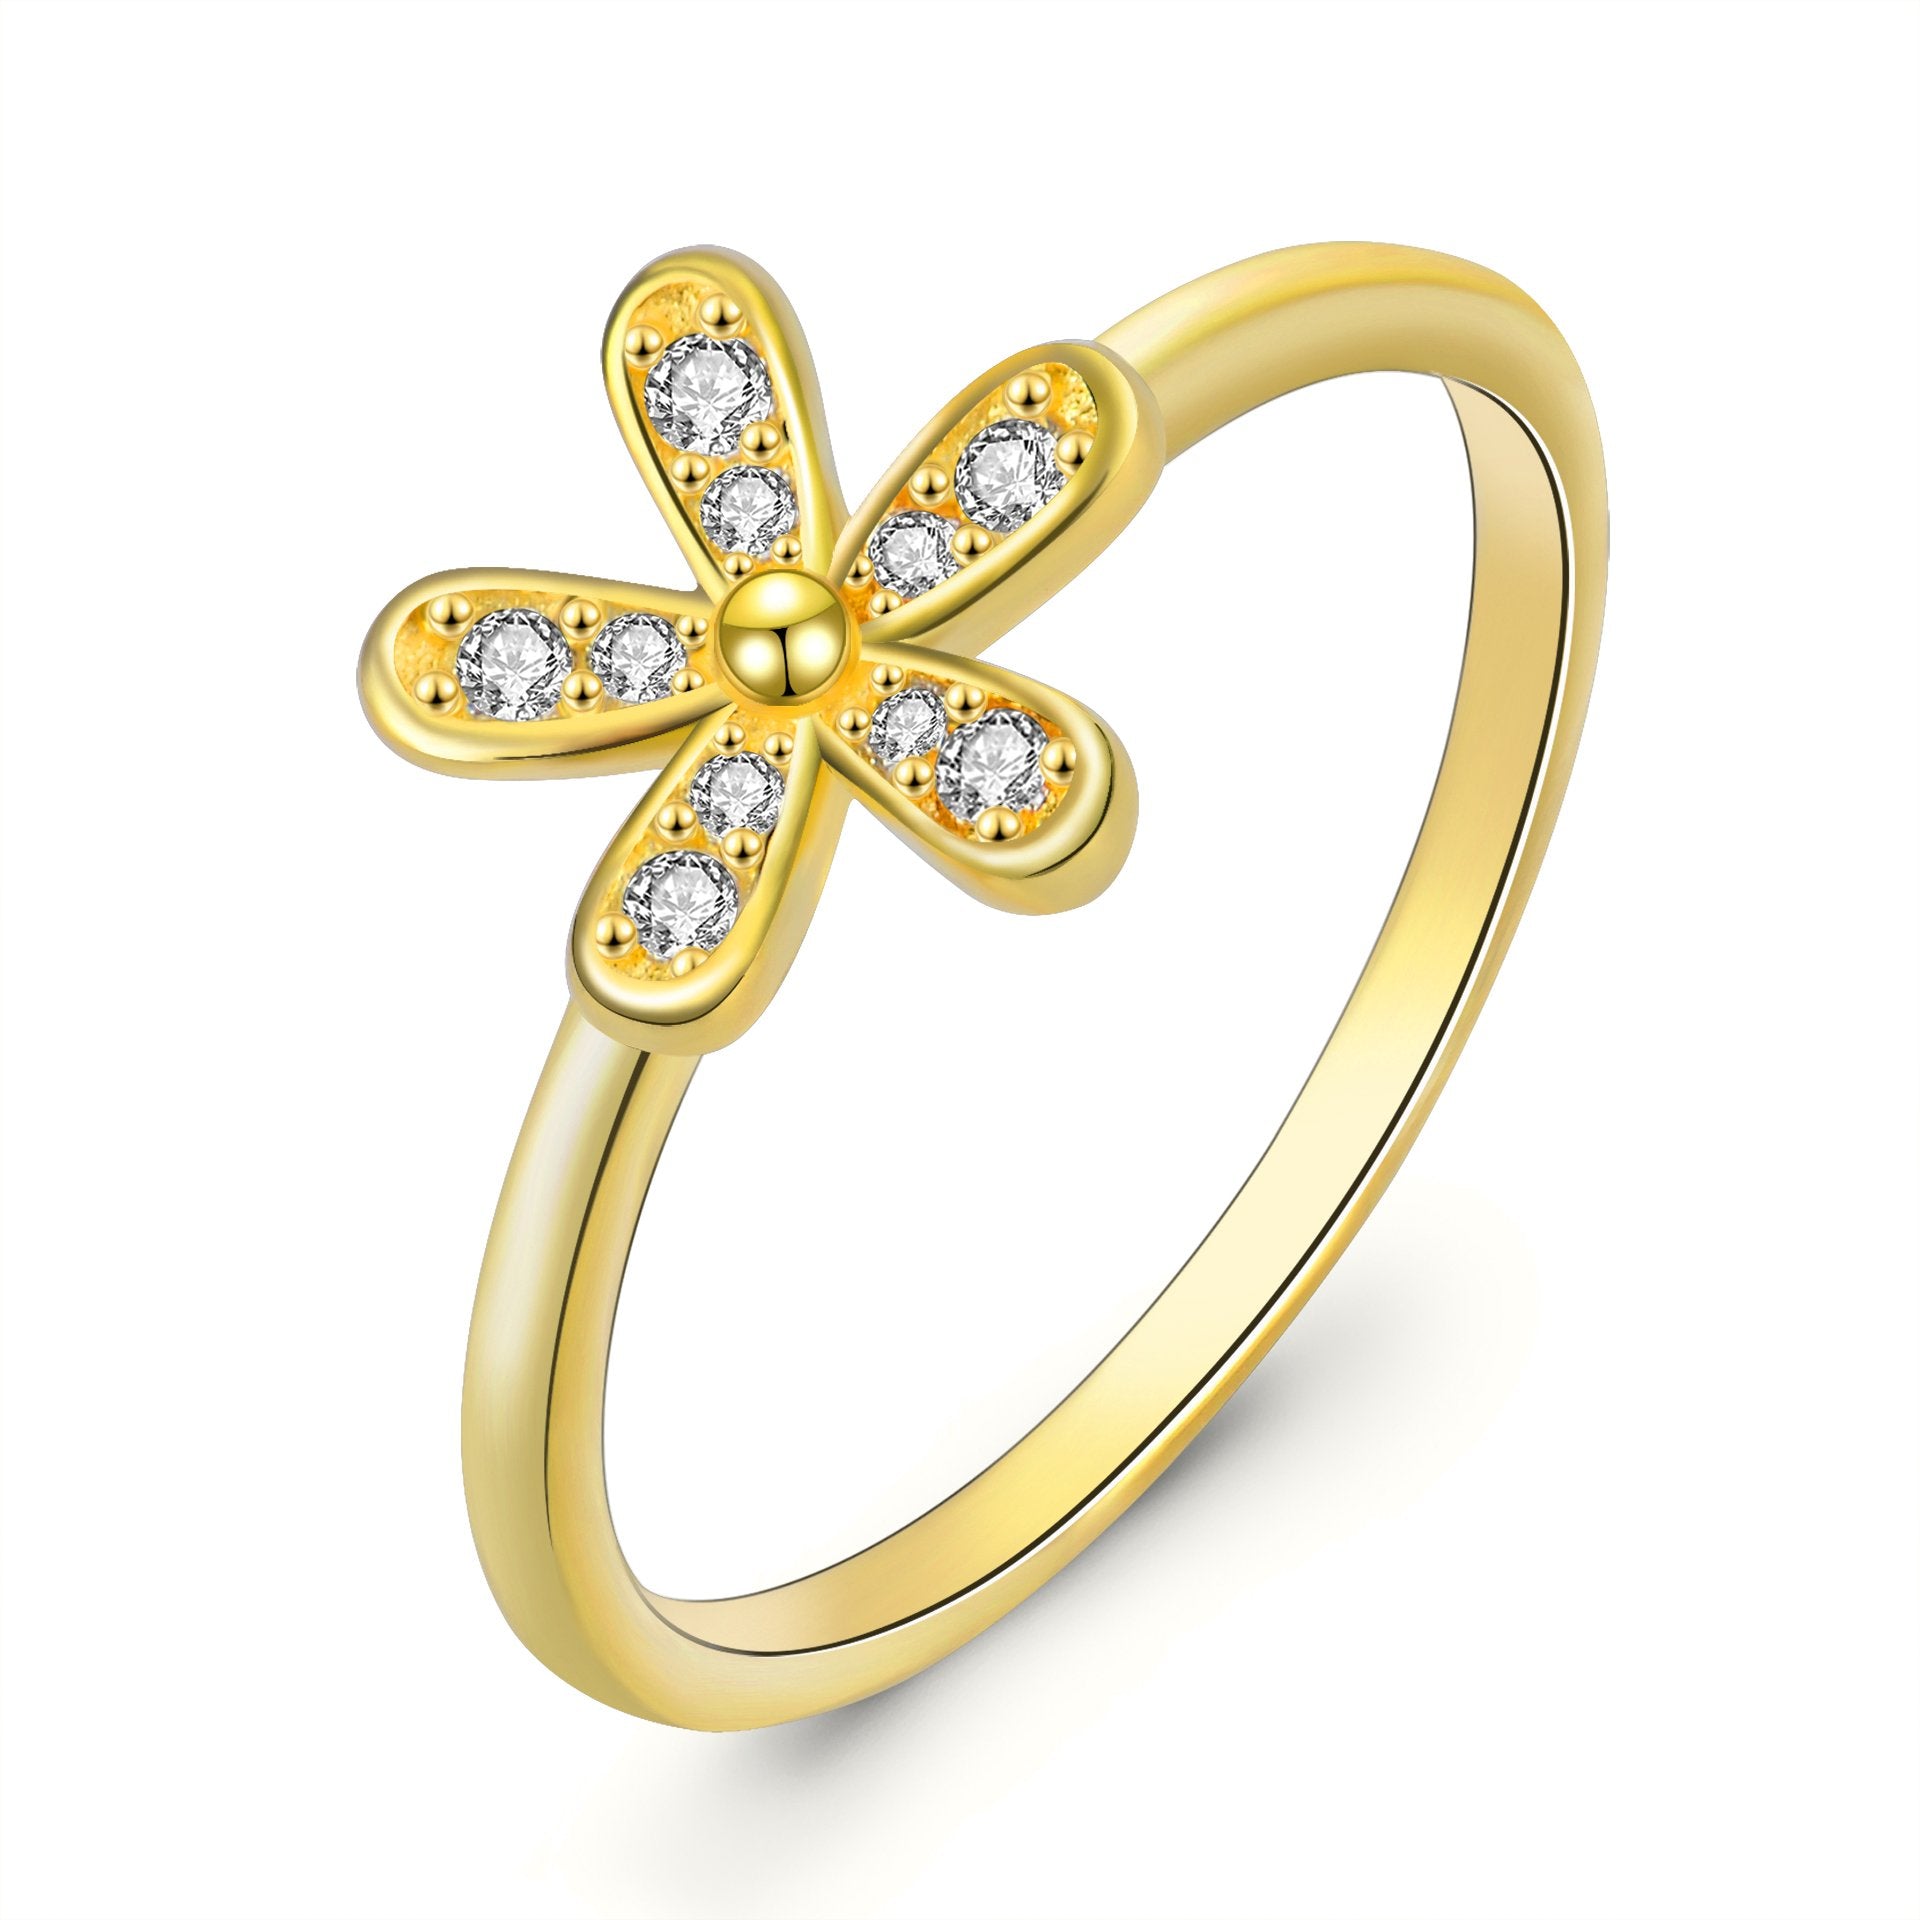 Flower Shape latest gold ring designs wedding rings engagement design